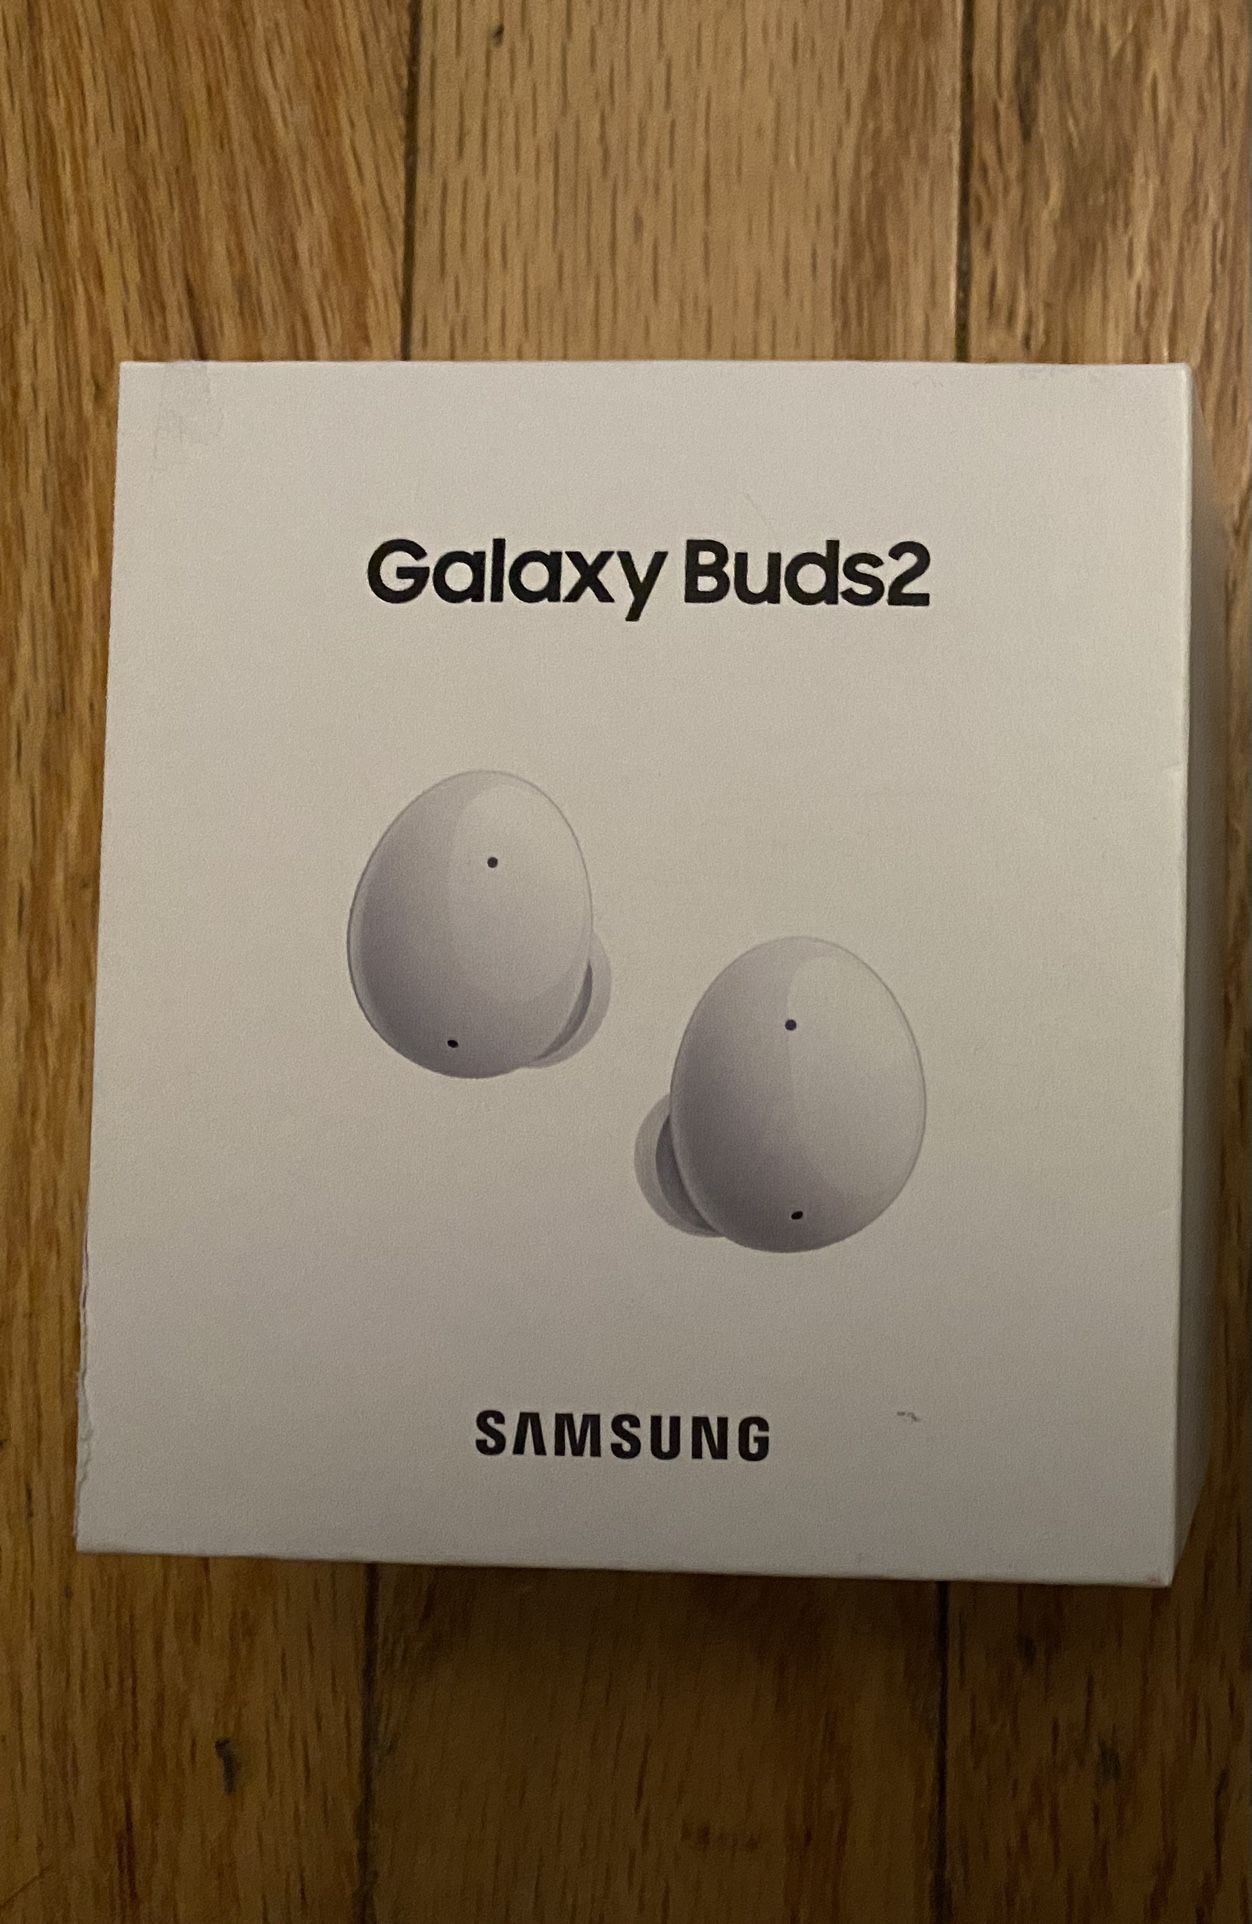 Samsung - Galaxy Buds2 True Wireless Earbud Headphones - White,New